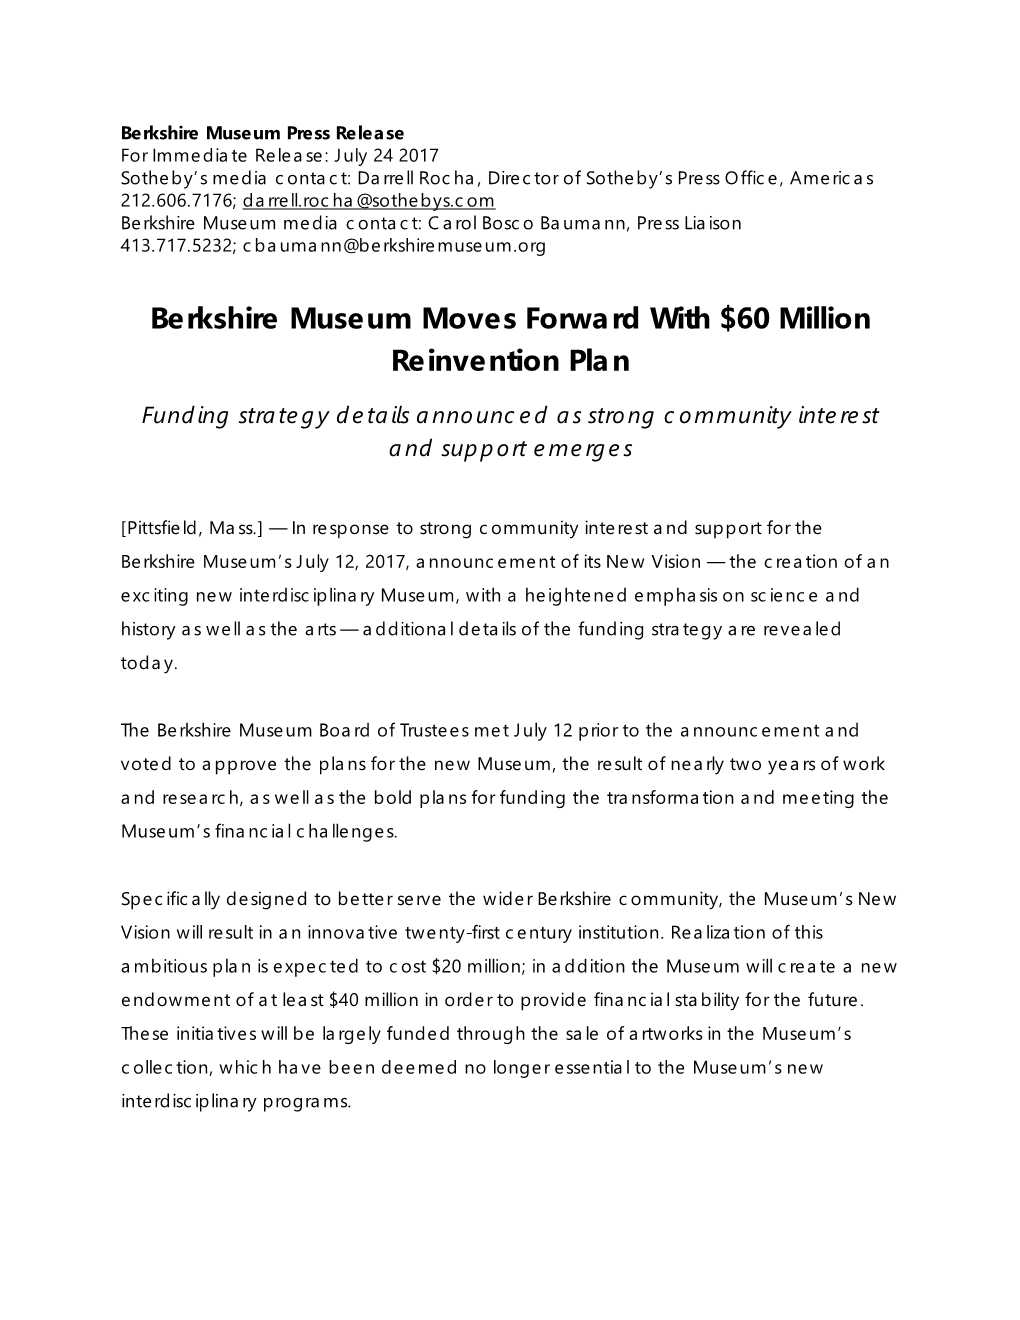 Berkshire Museum Announces Details of New Vision